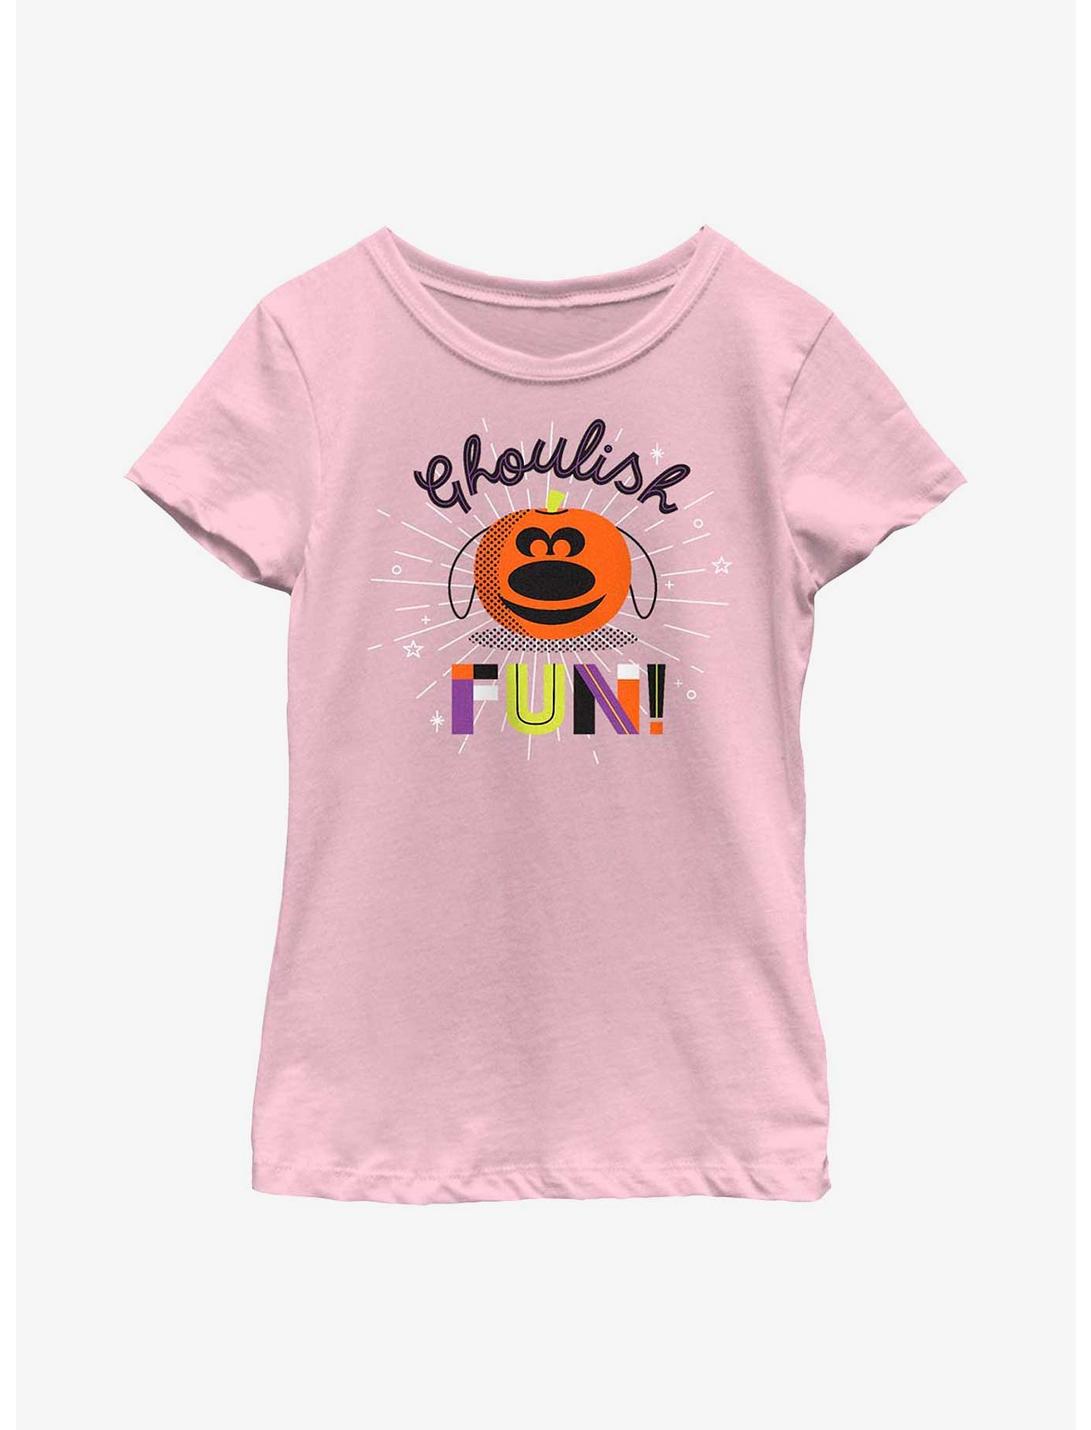 Disney Pixar Up Dug's Ghoulish Fun! Youth Girls T-Shirt, PINK, hi-res